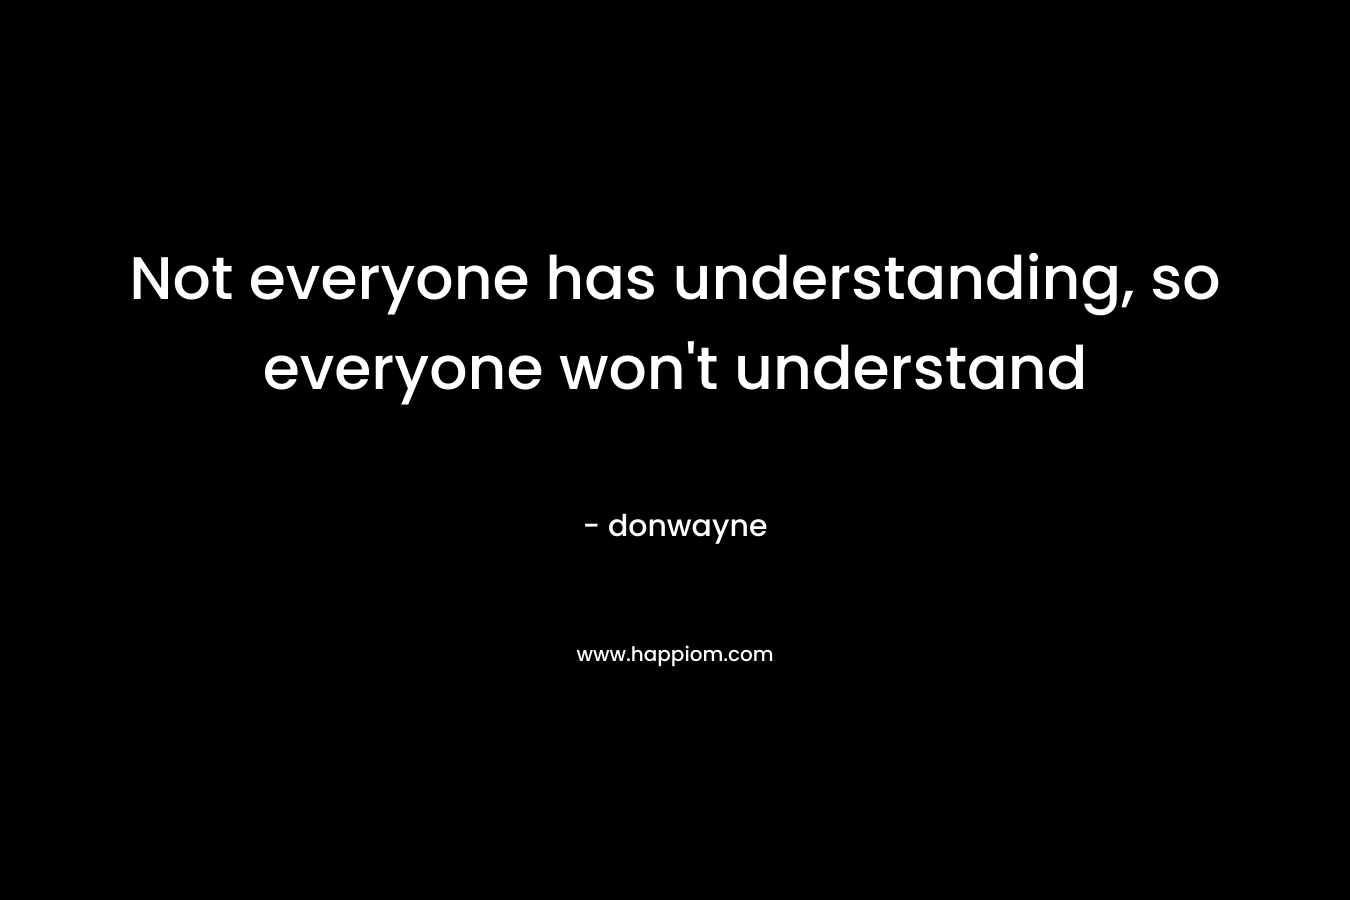 Not everyone has understanding, so everyone won't understand